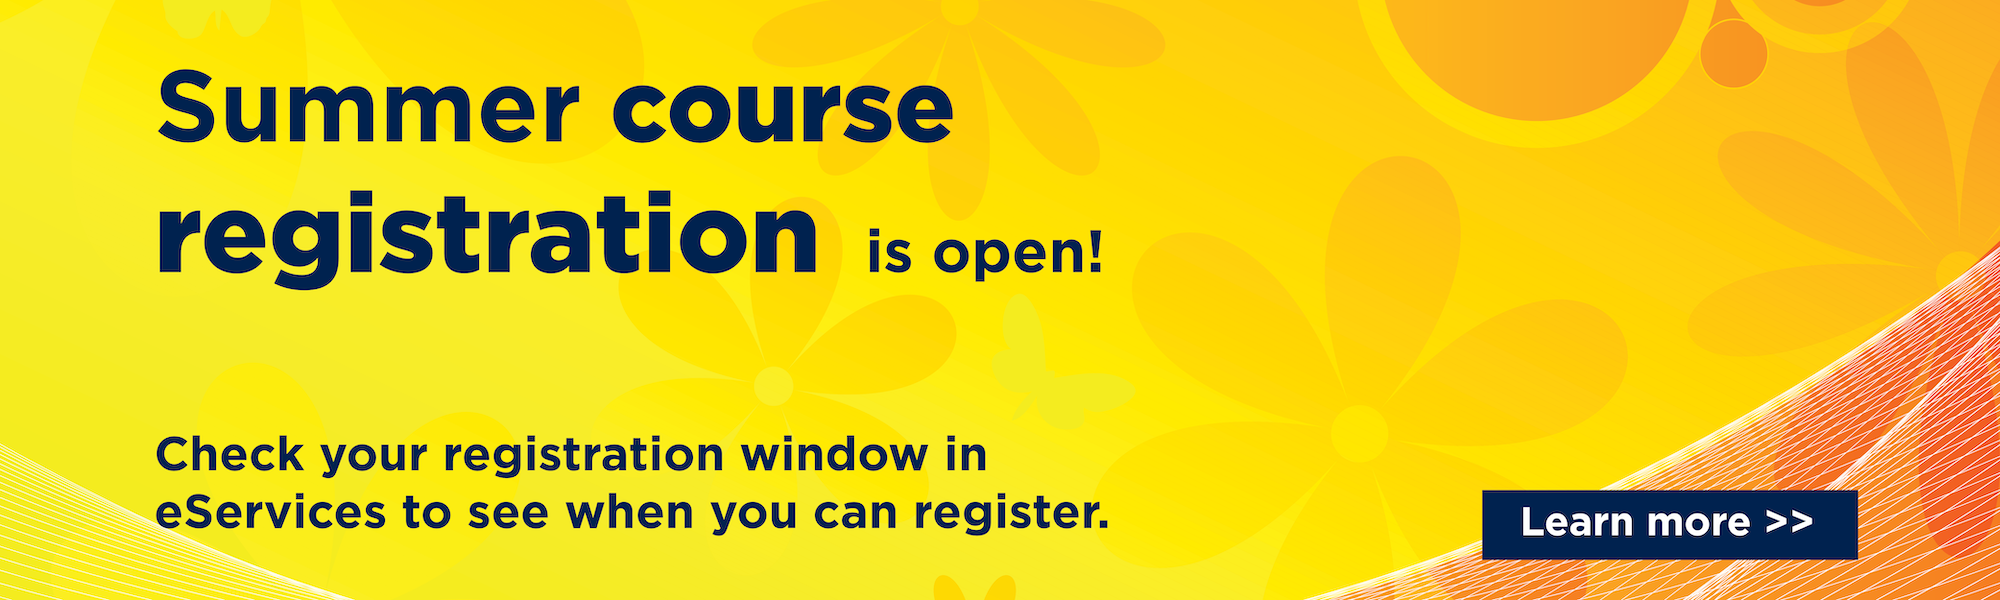 summer course registration